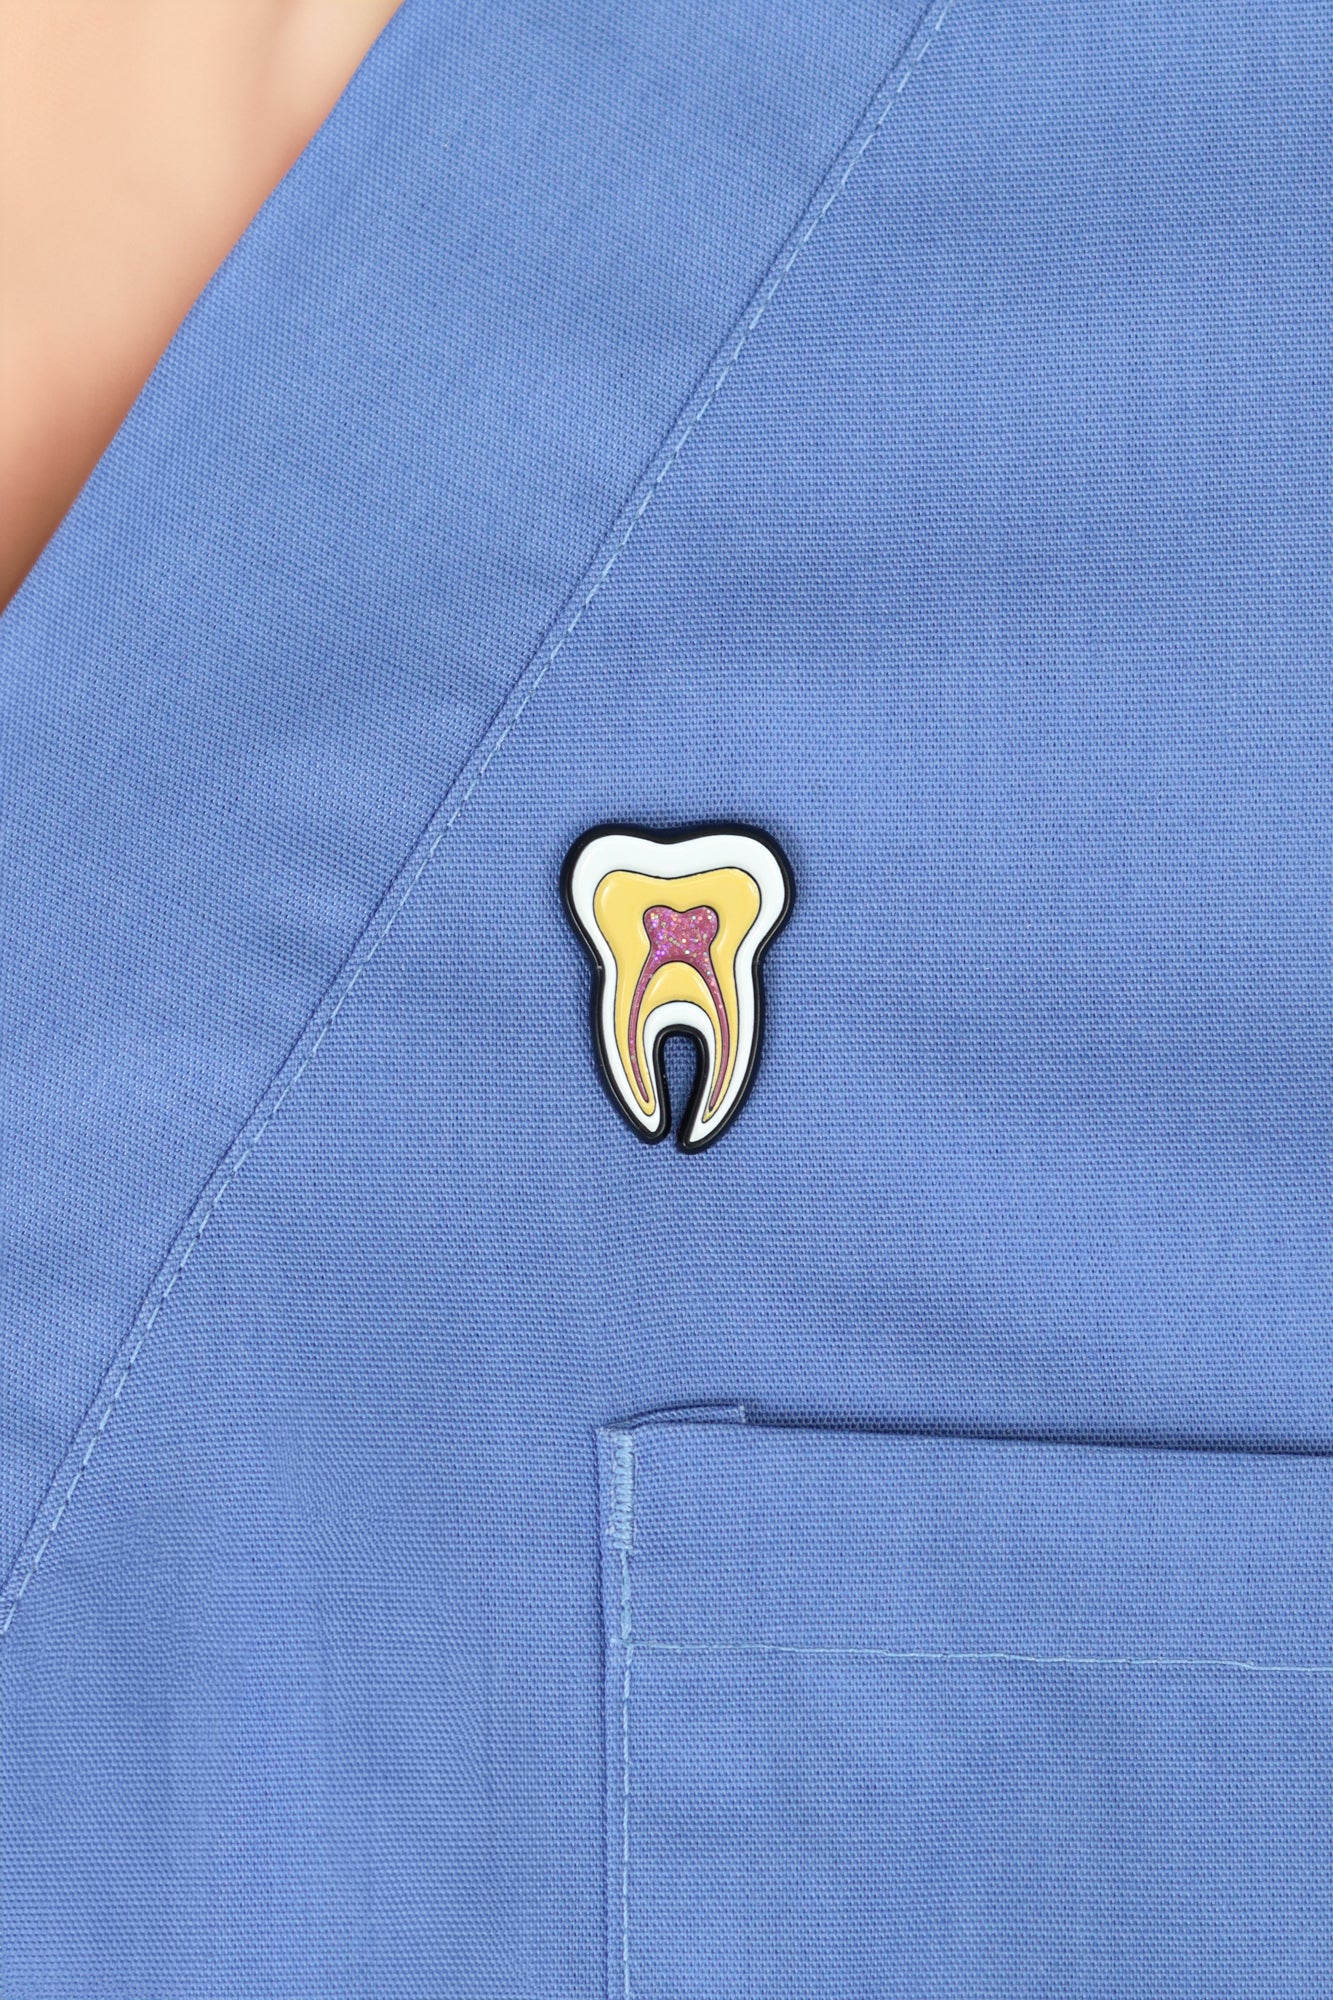 Anatomical tooth Pin